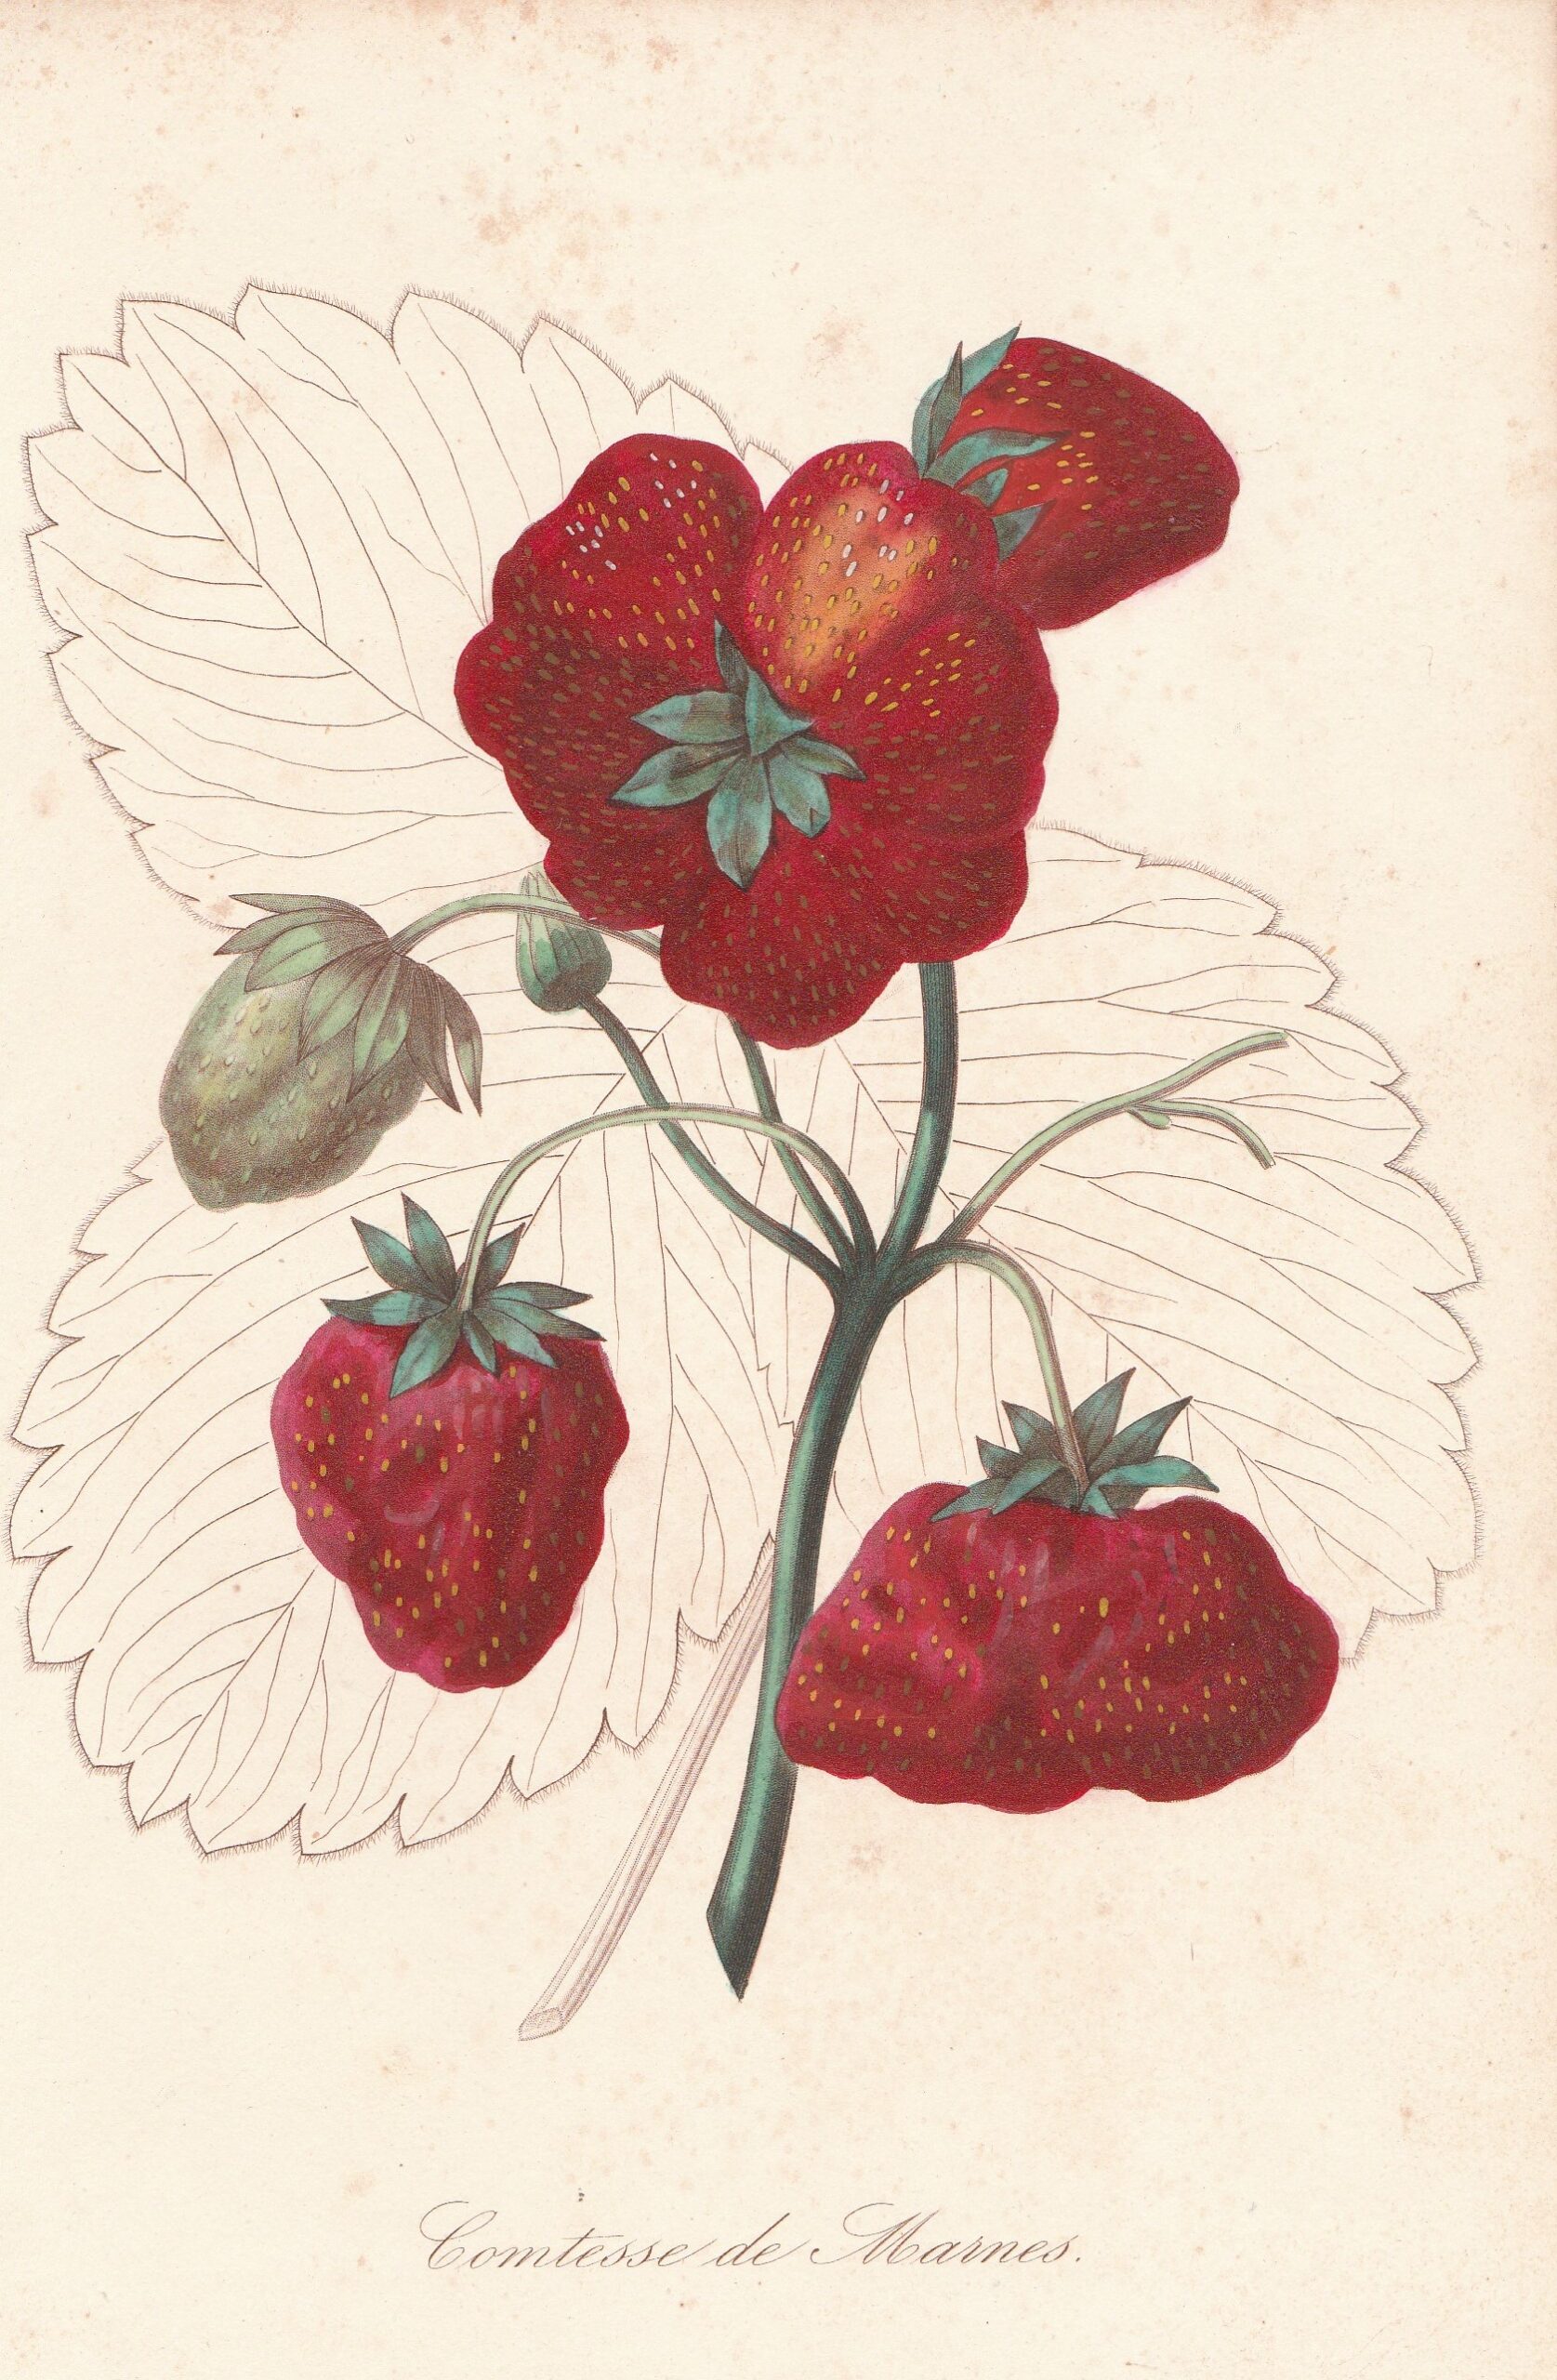 Graindorge-RH-1851-Comtesse de marnes